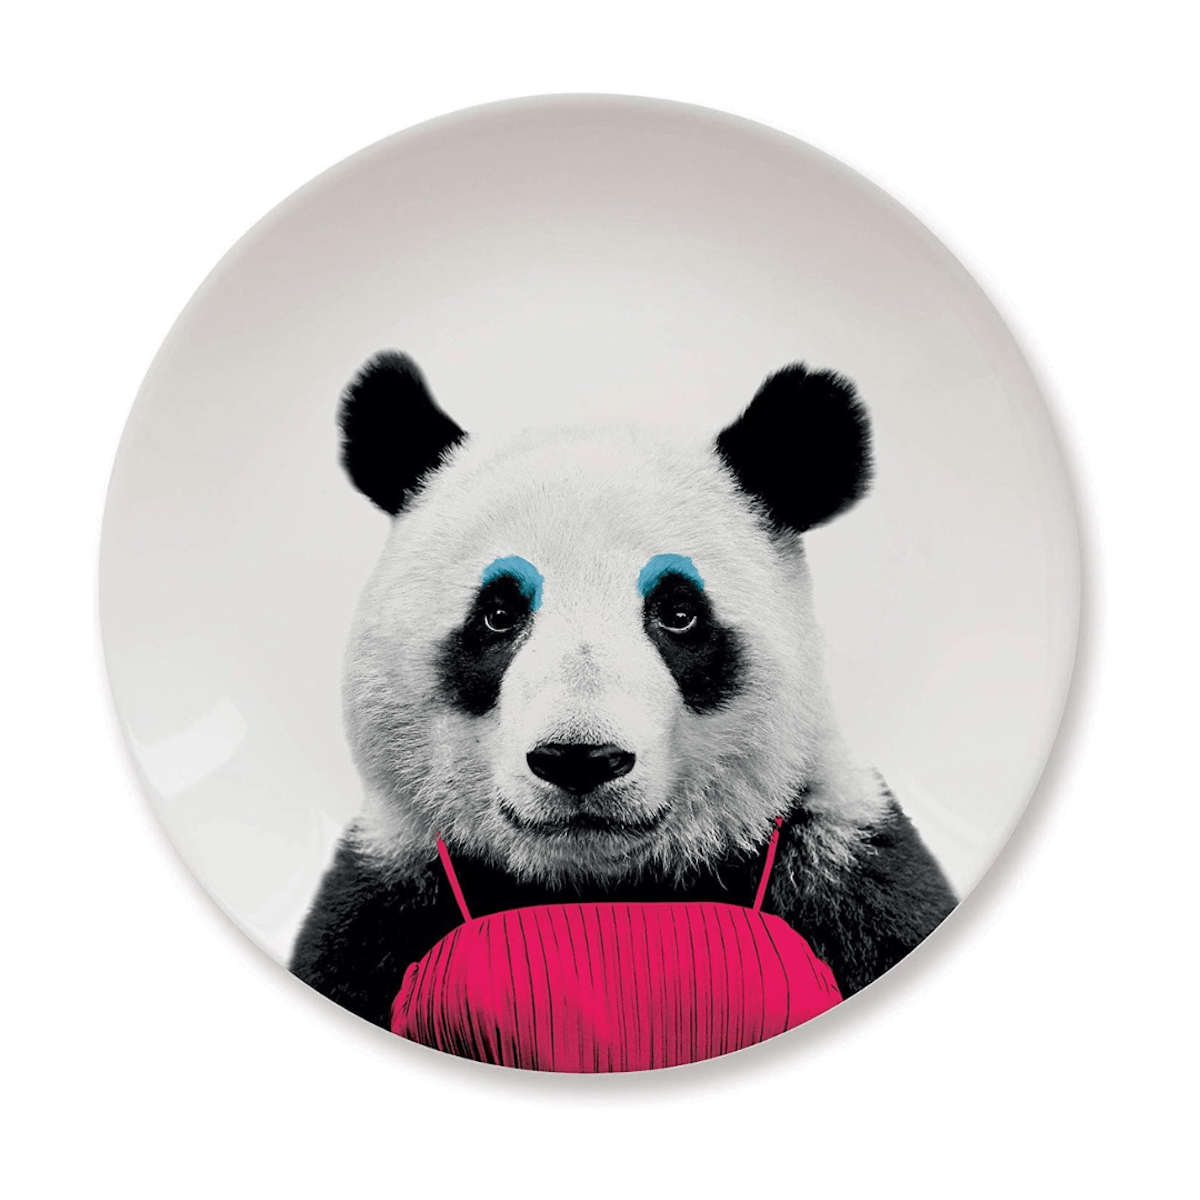 Mustard Dining Table Accessories Panda Design Wild Dining Animal Plate